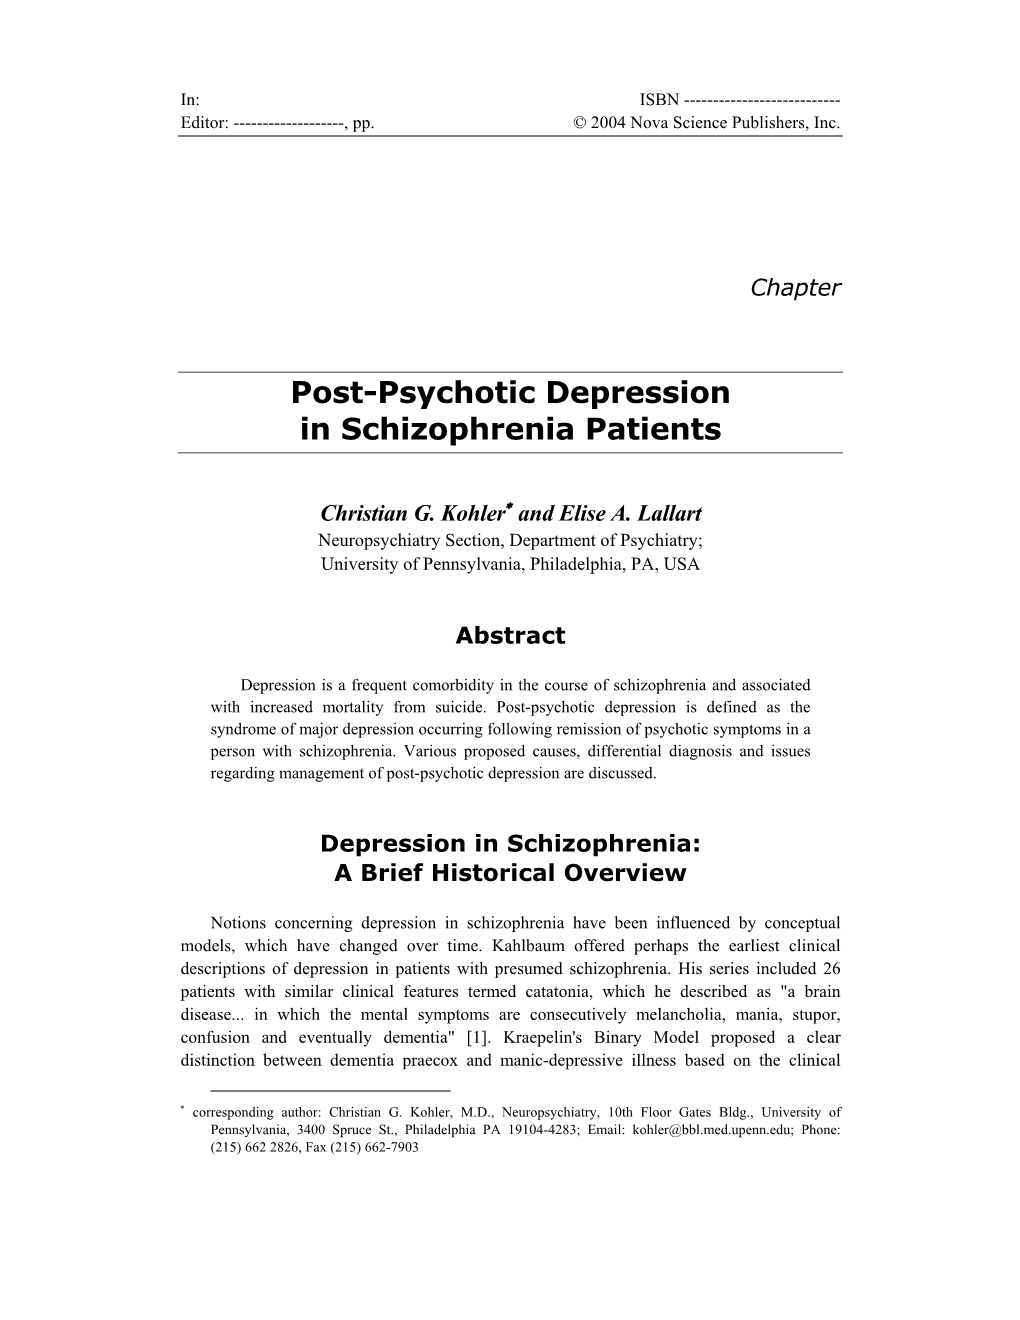 Post-Psychotic Depression in Schizophrenia Patients